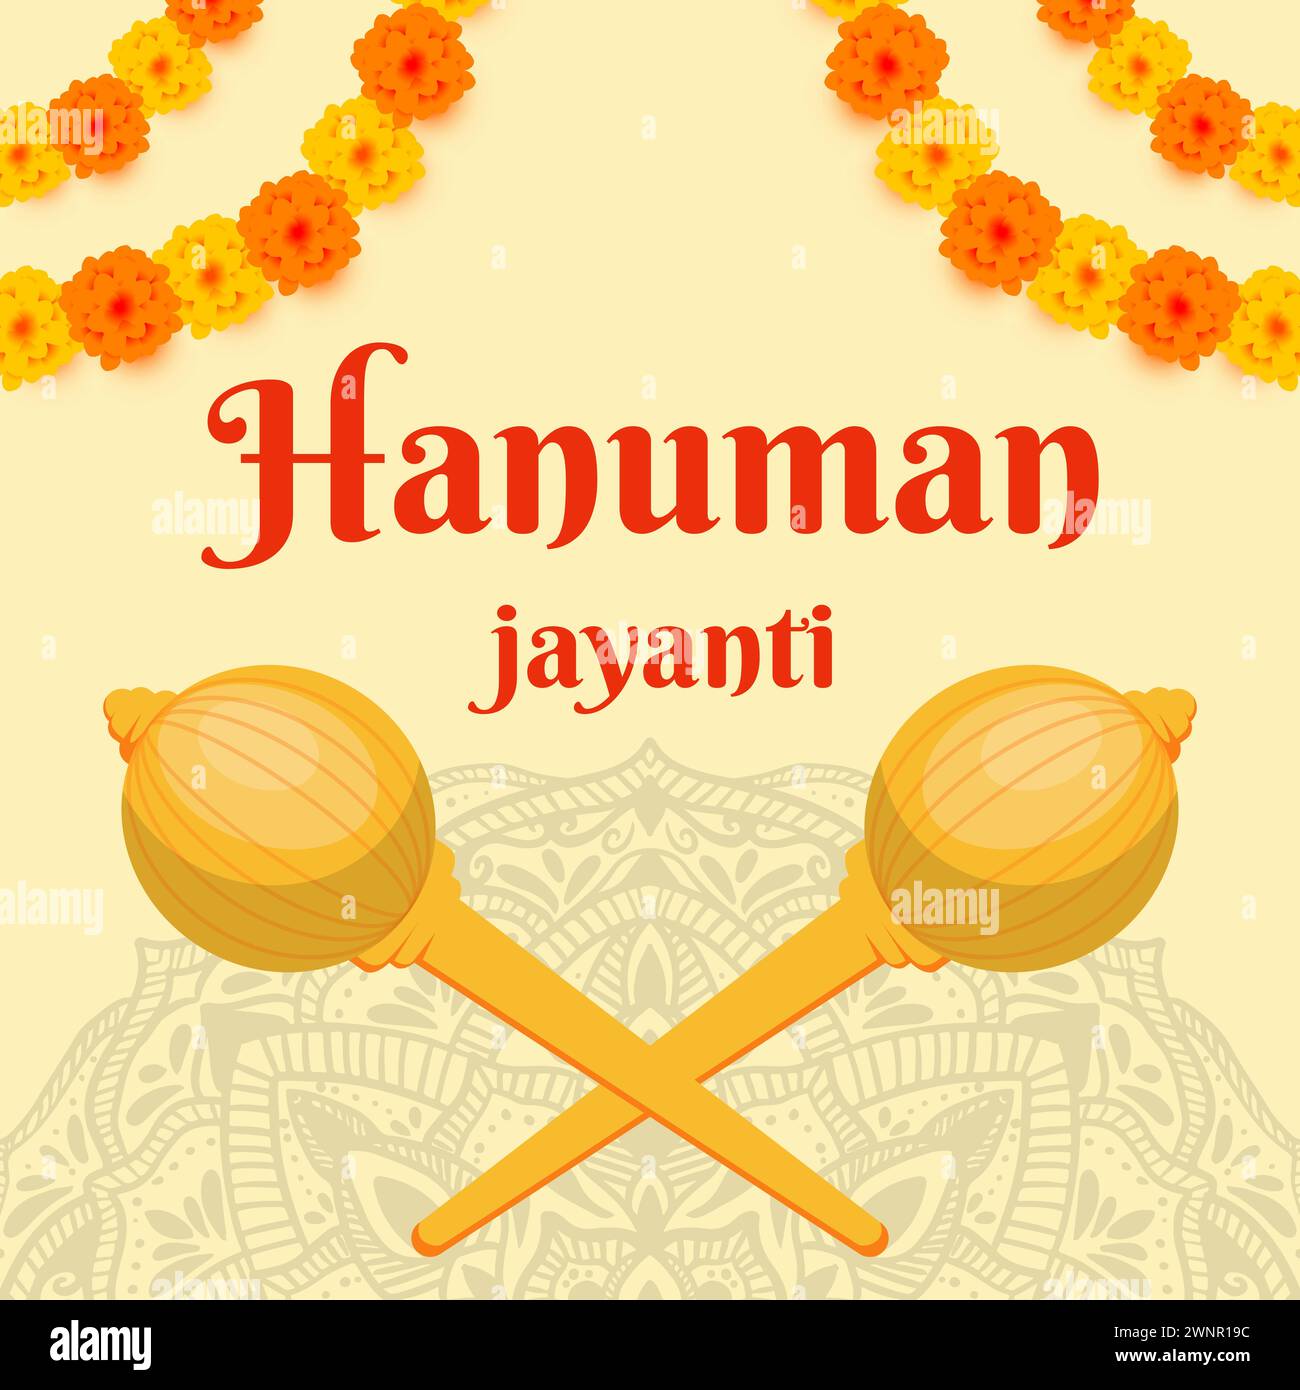 flat vector design style hanuman jayanti illustration Stock Vector